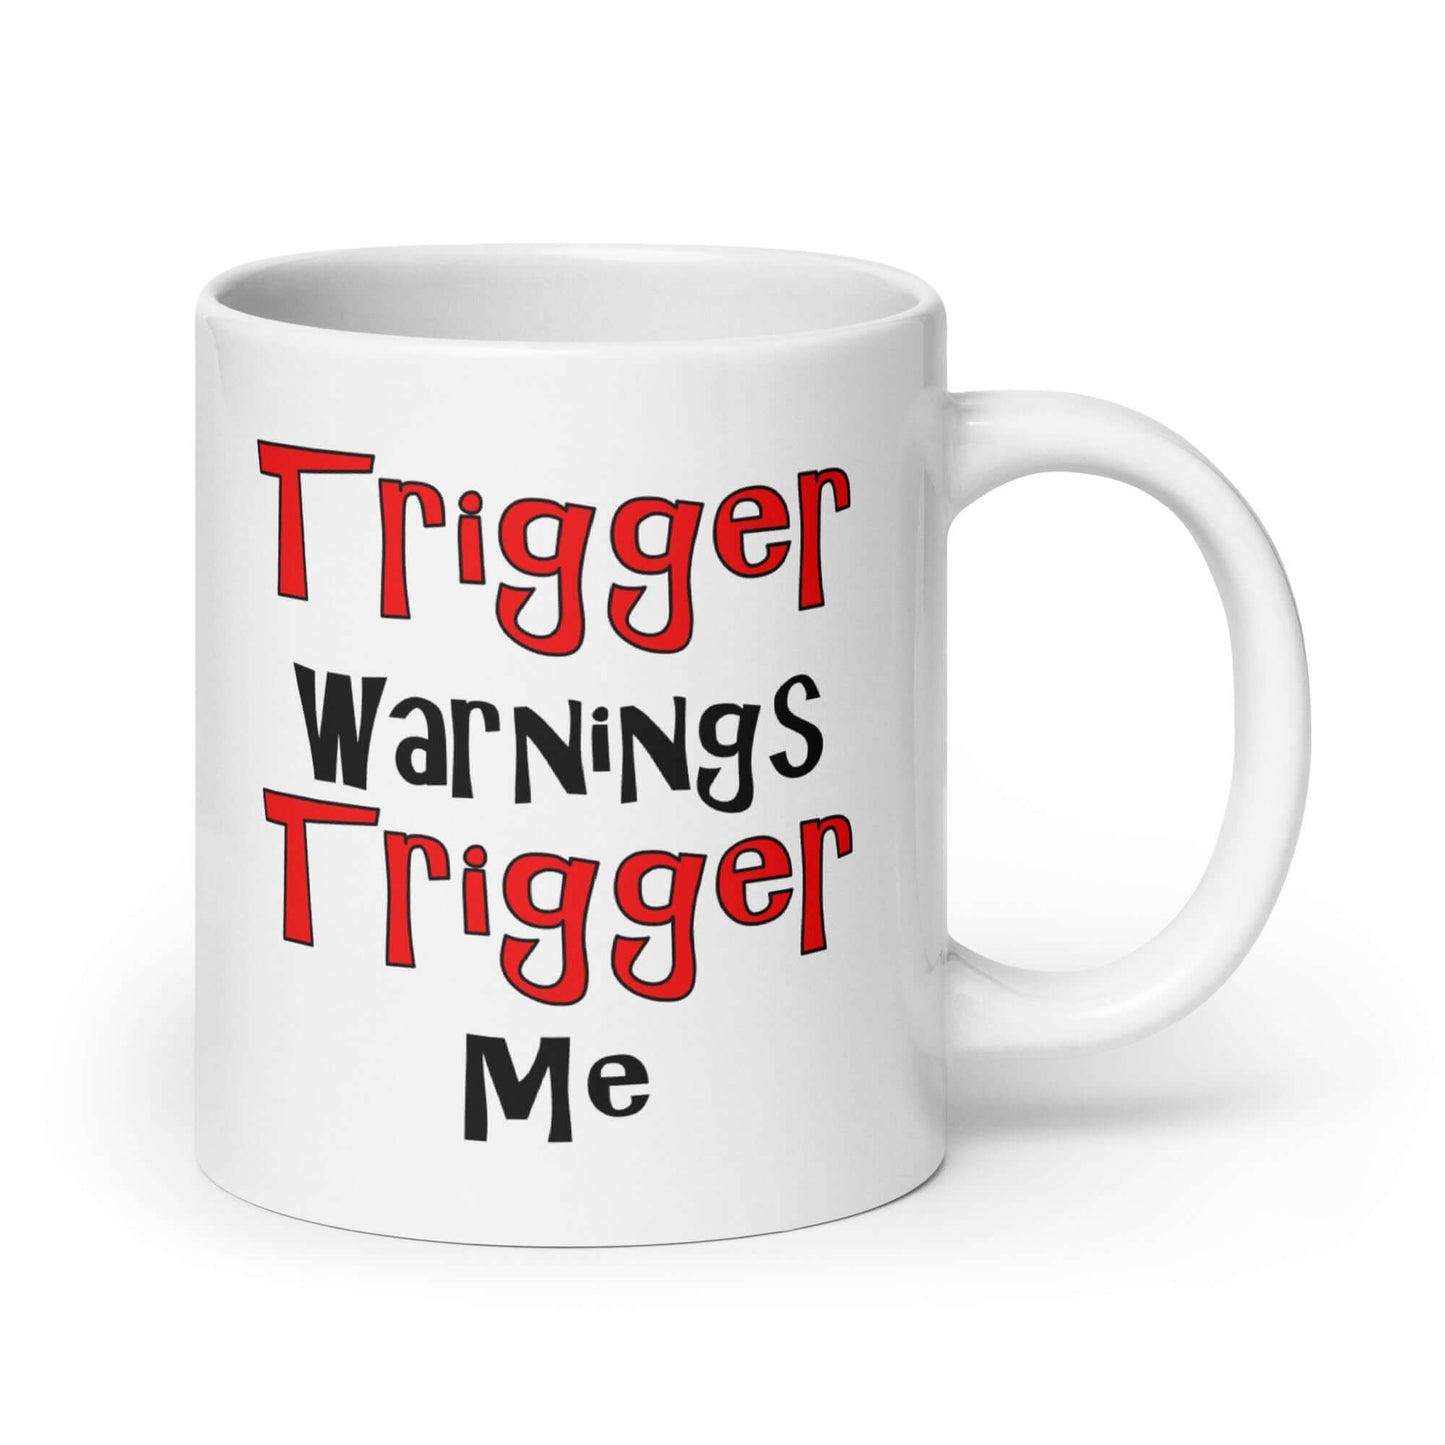 Trigger warnings trigger me snarky mug